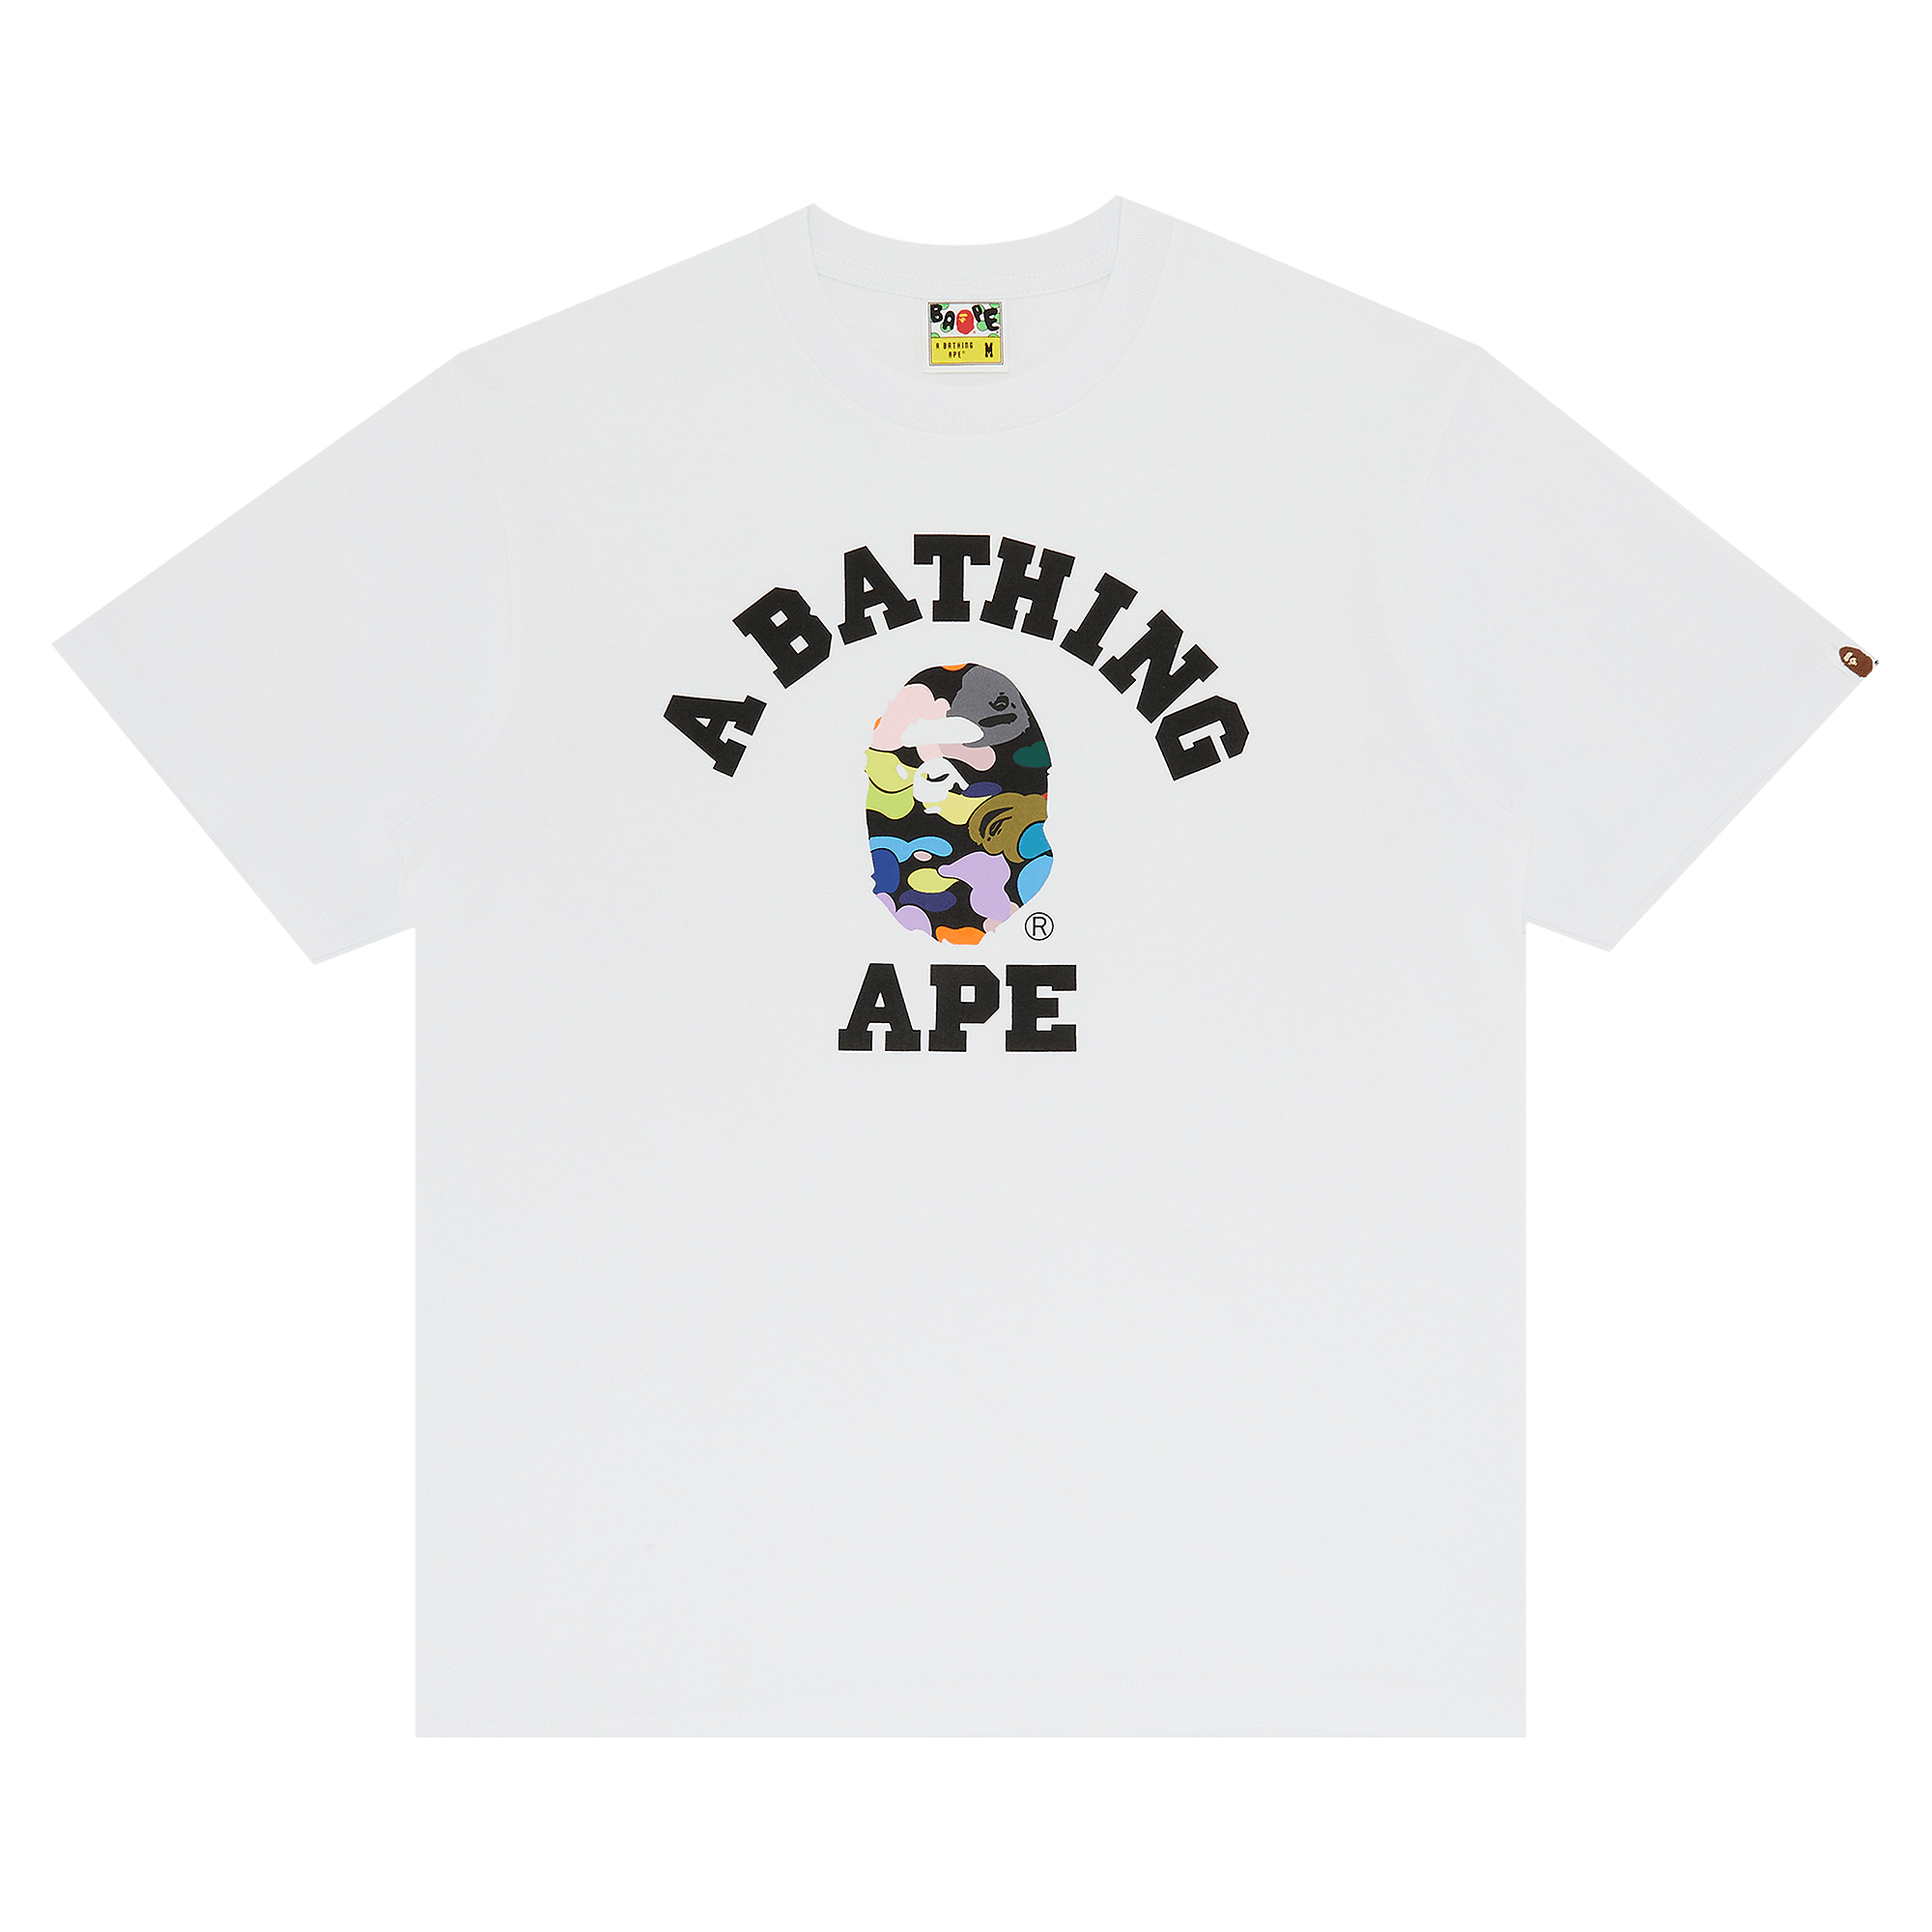 NFS limited BAPE Jacob necklace T-shirt a bathing ape NIGO White Size M